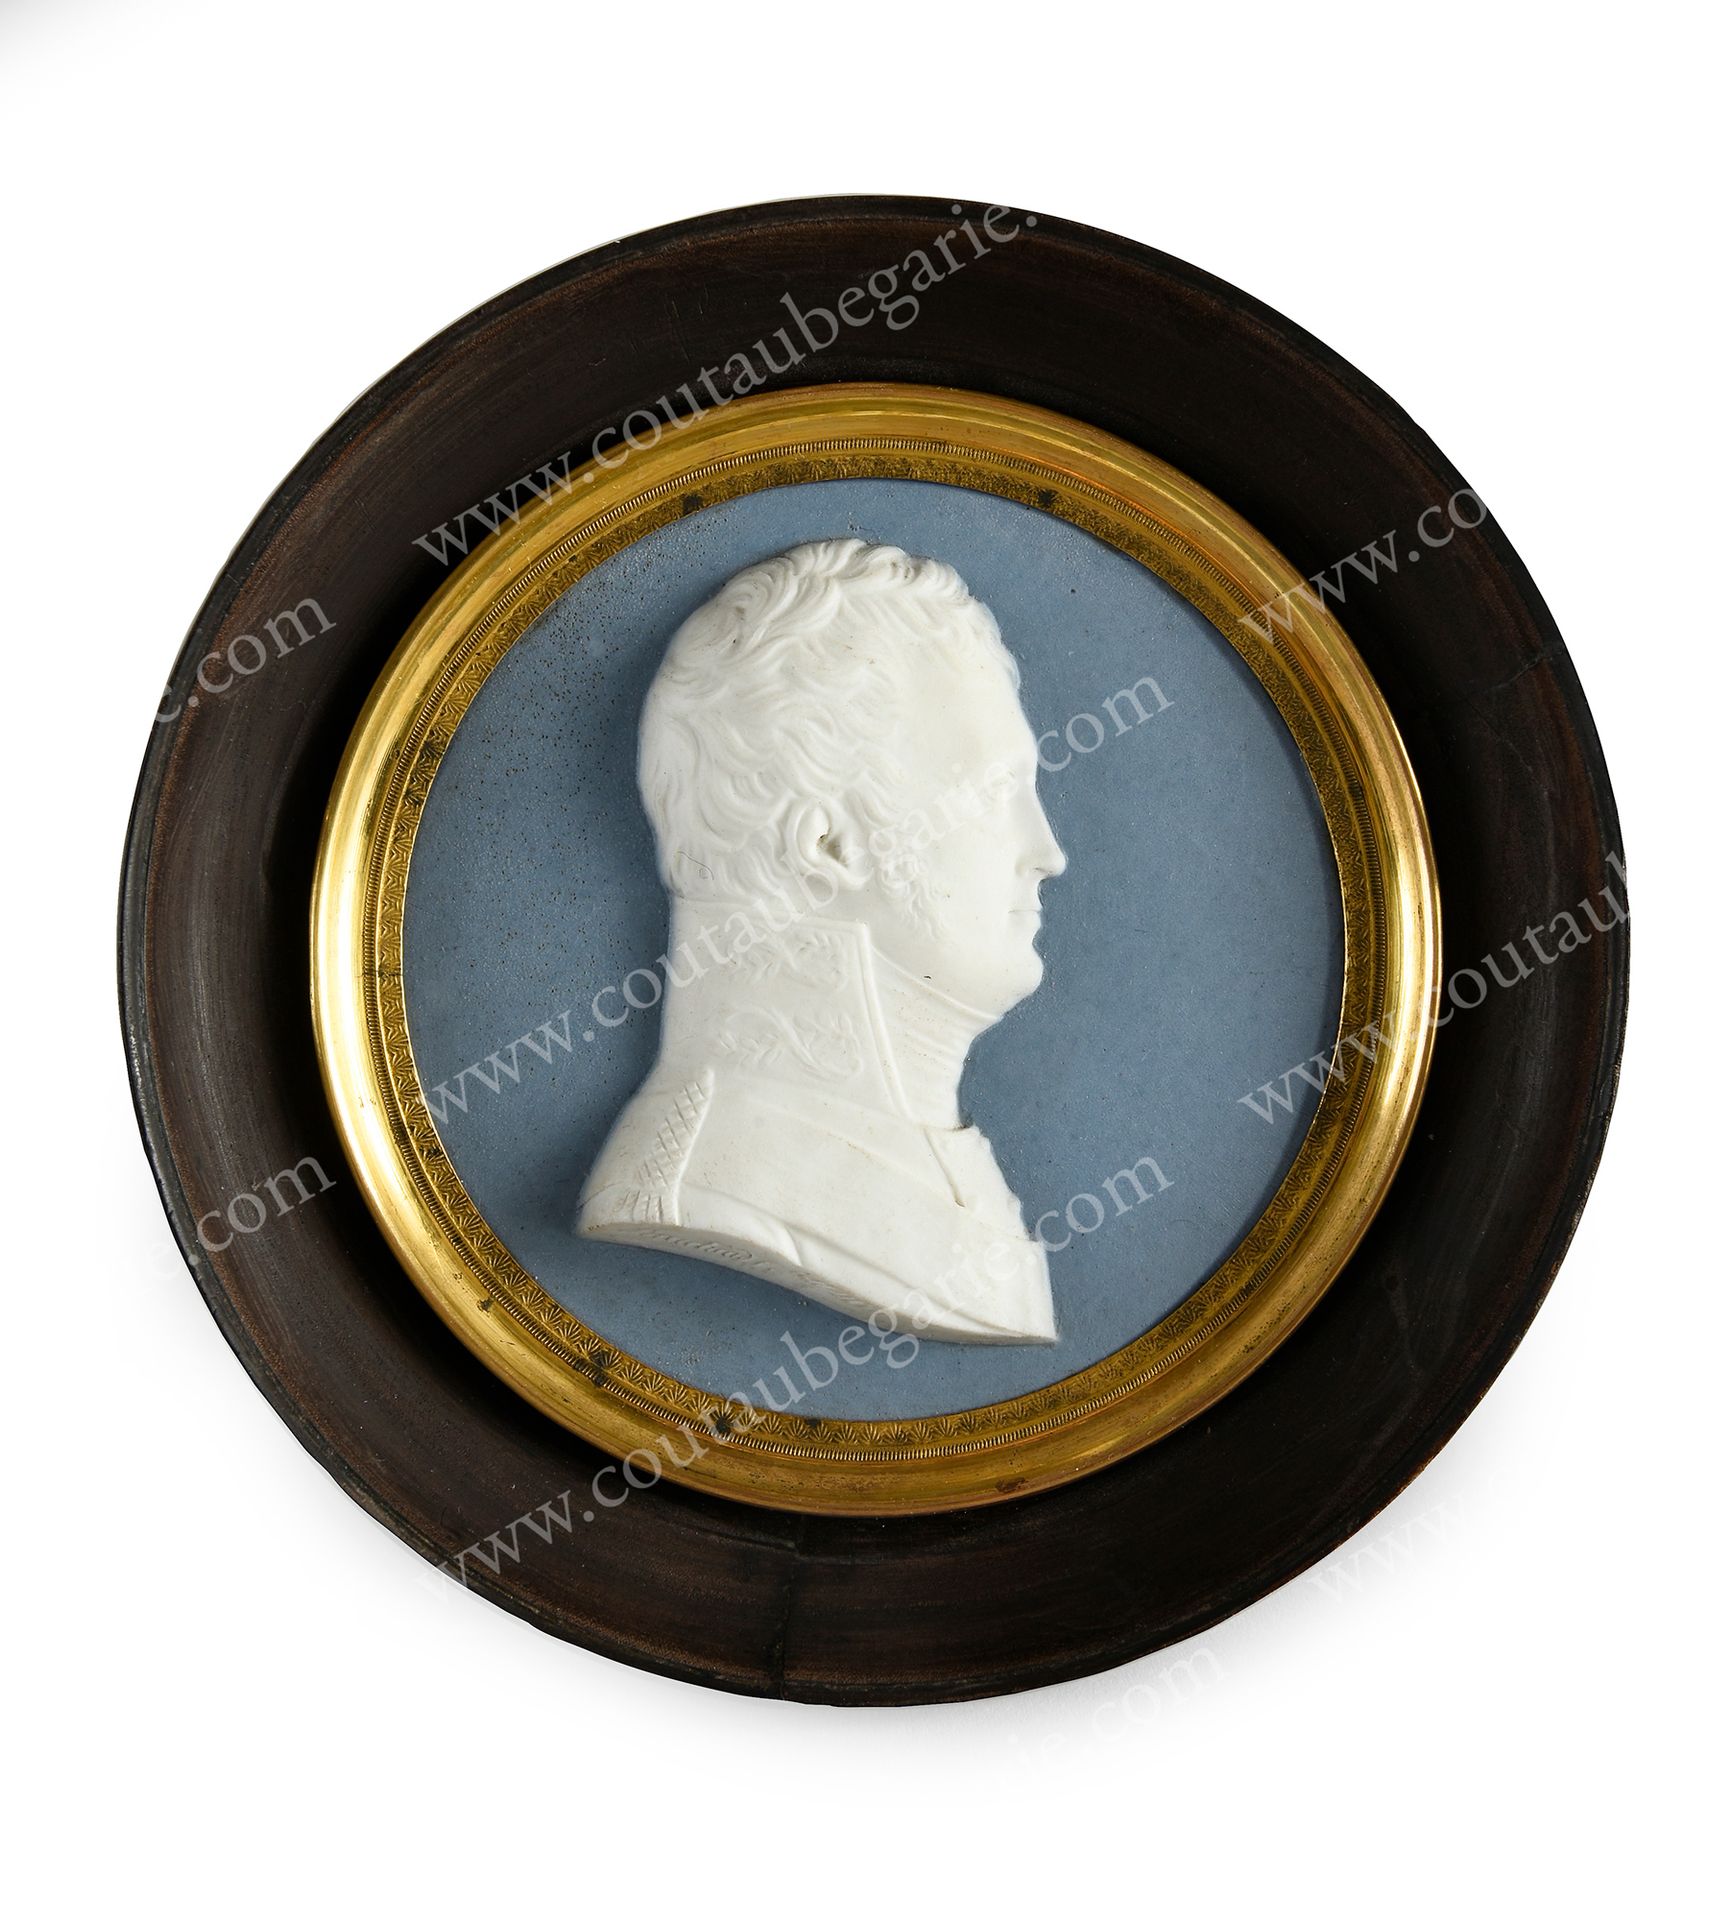 Null 布拉哈德-让-查尔斯（1766-1846）。
俄罗斯皇帝亚历山大一世（1777-1825）。
圆形饼干奖章，表现君主的轮廓，在韦奇伍德风格的浅蓝色背景&hellip;